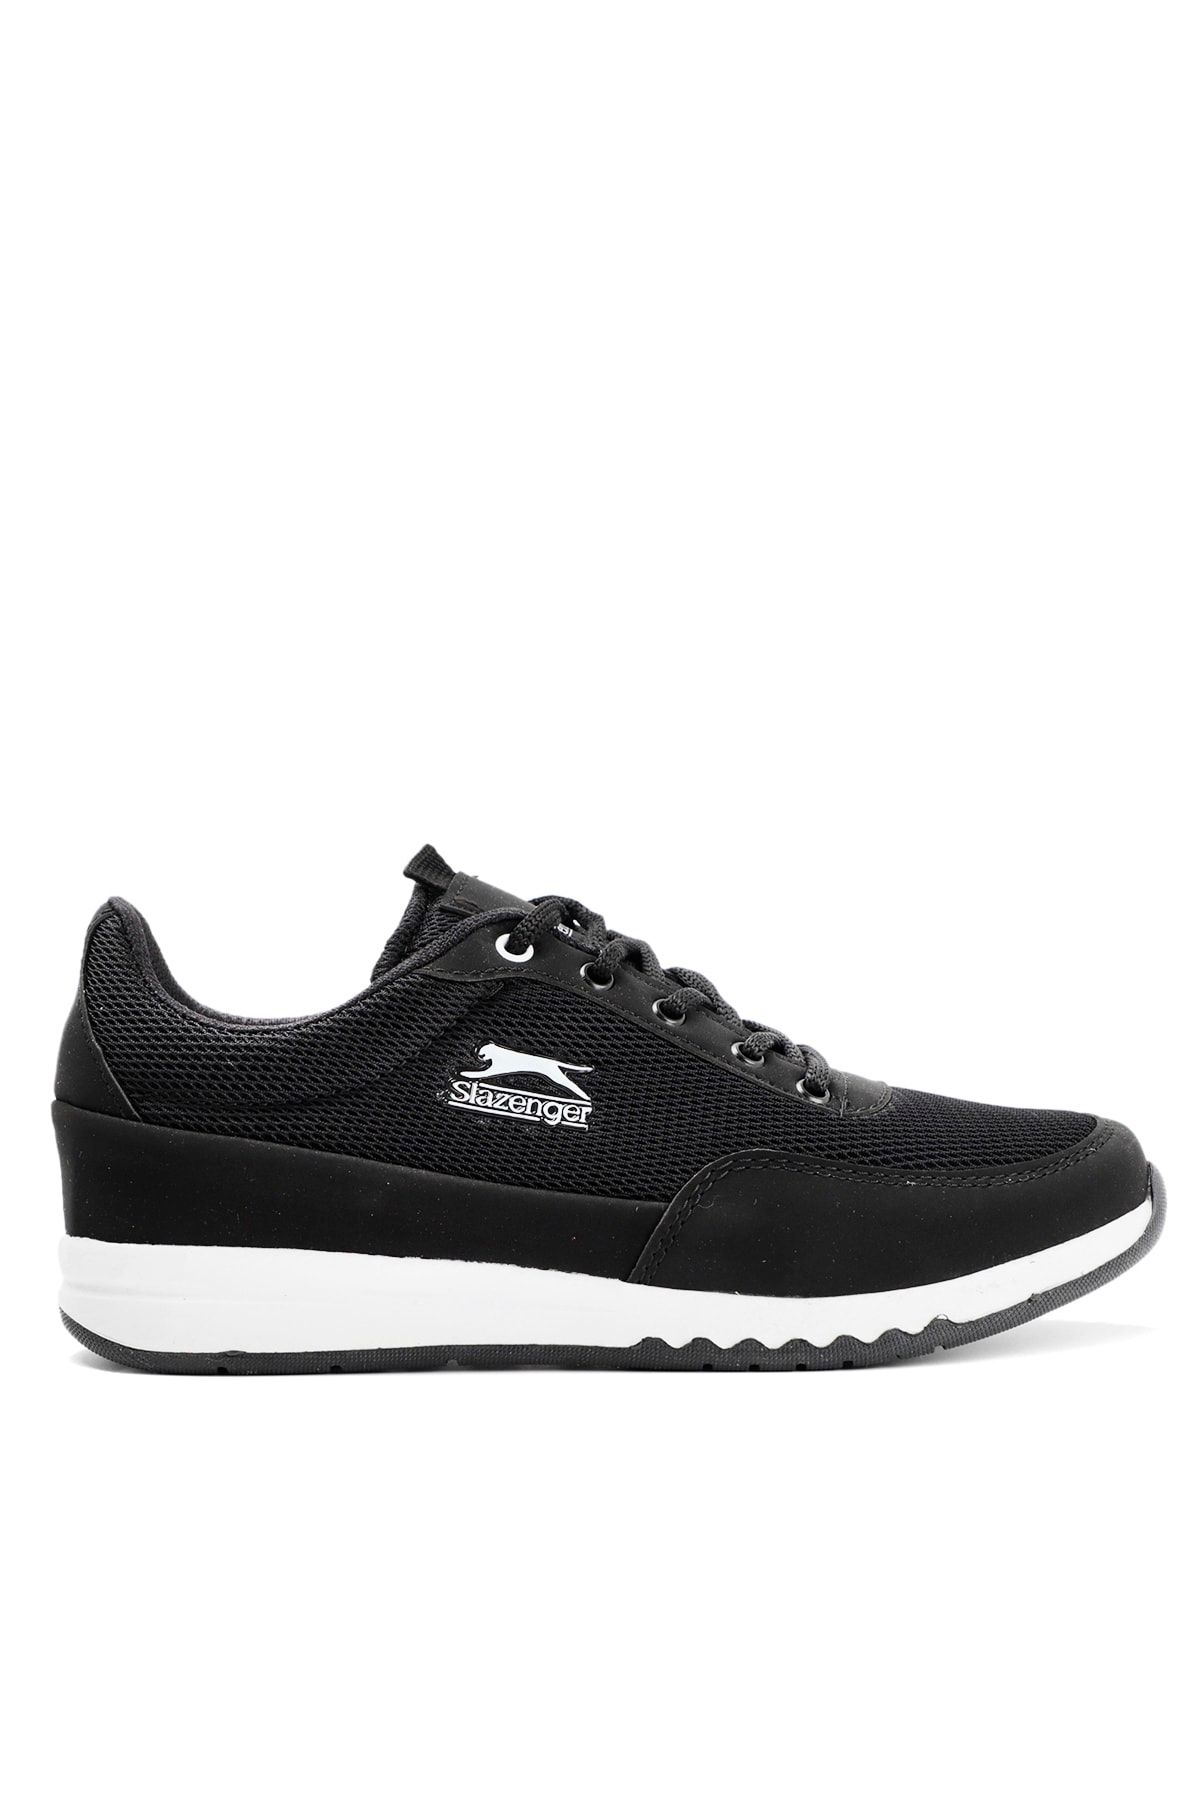 Slazenger Angle I Sneaker Ayakkabı Siyah / Beyaz